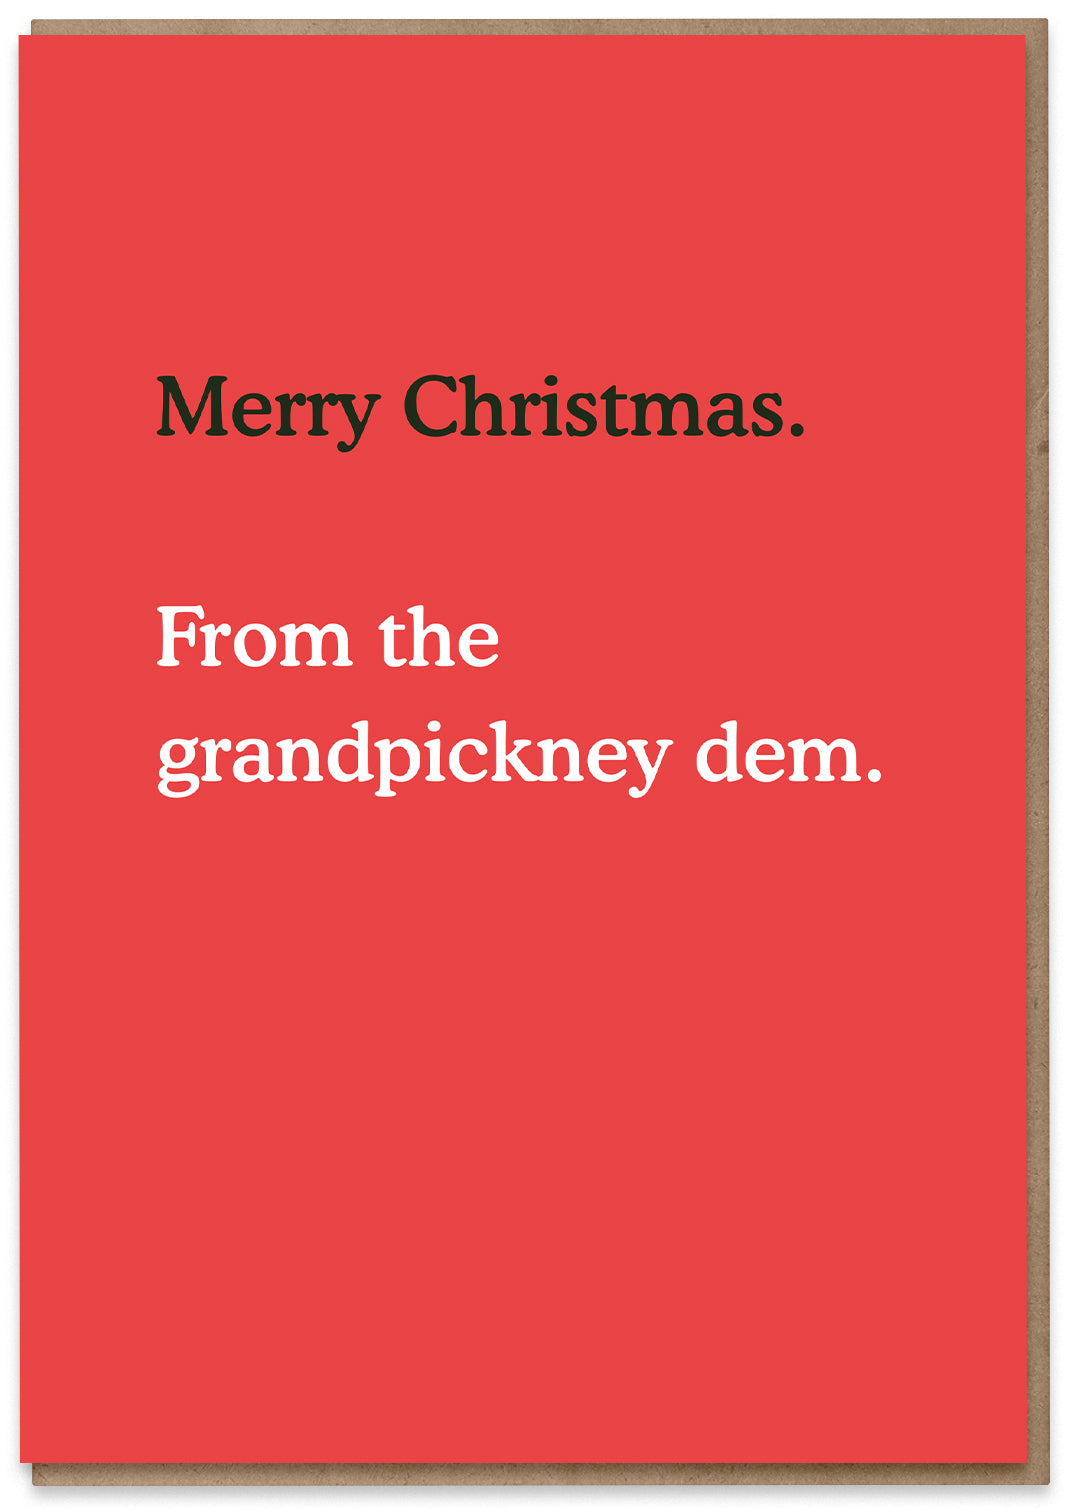 Merry Christmas from the Grandpickney Dem